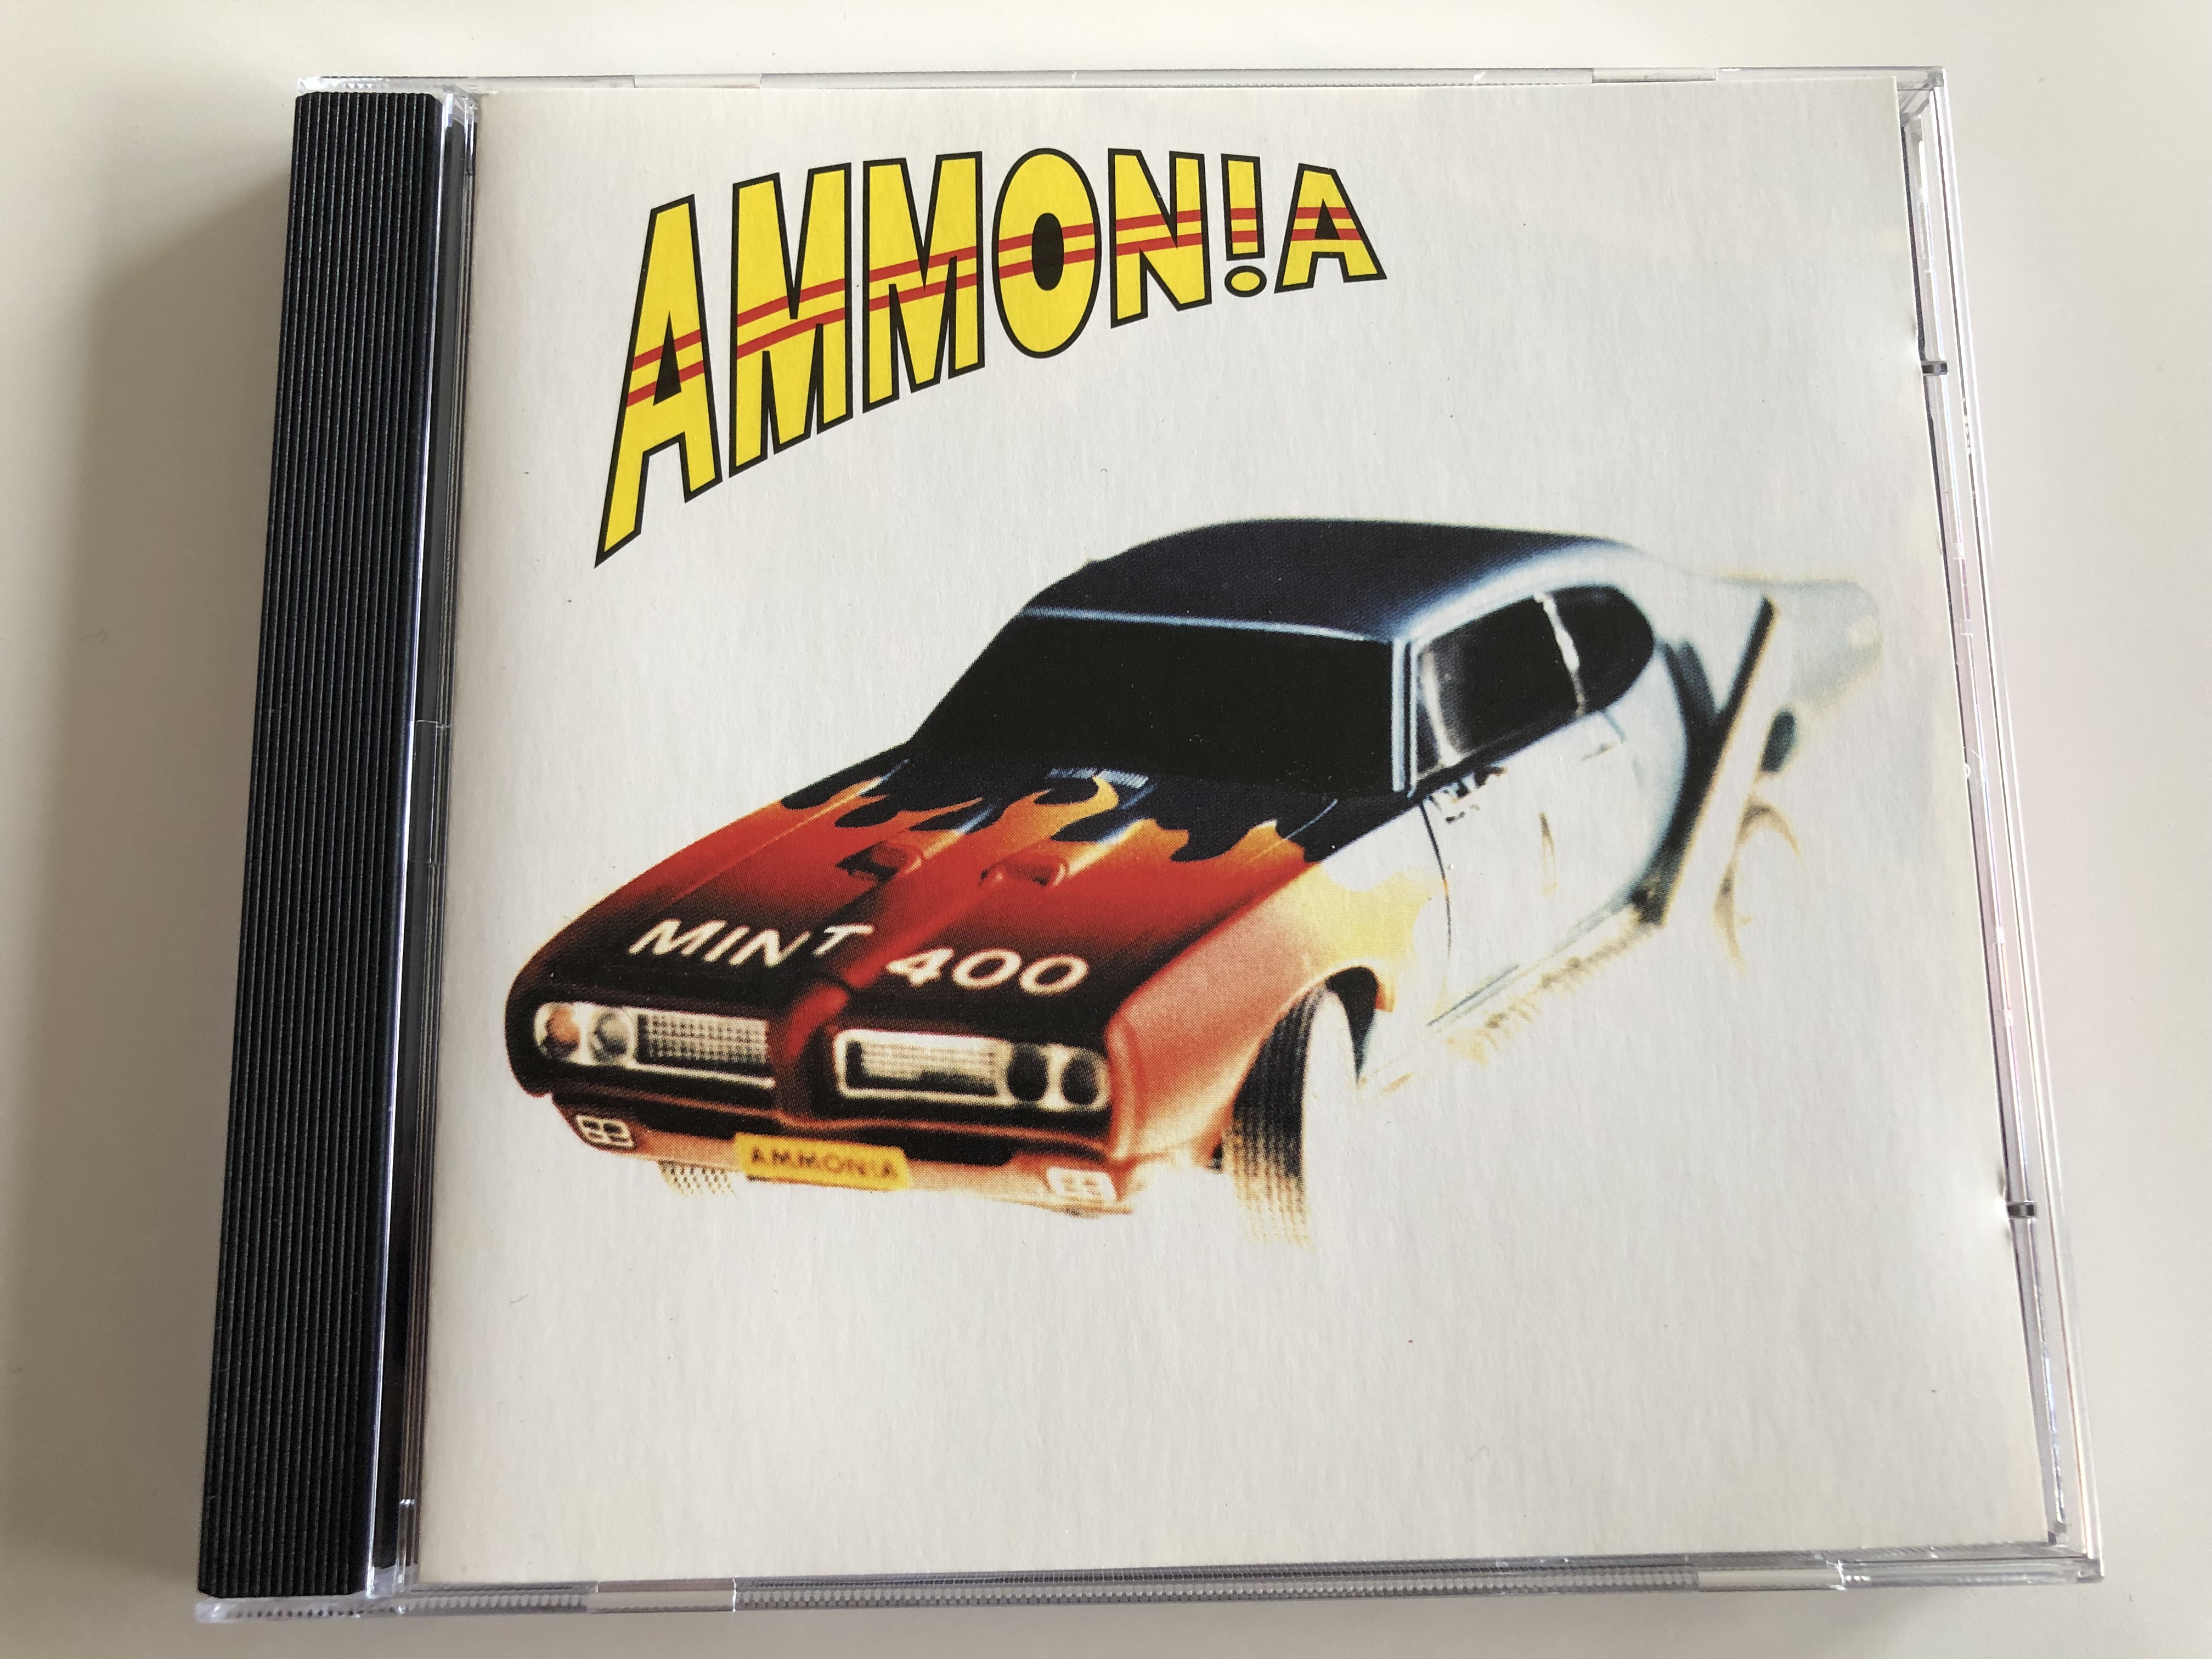 ammon-a-mint-400-dave-johnstone-guitar-vocals-simon-hensworth-bass-allan-balmont-drums-audio-cd-1996-epic-murmur-epc-4837902-1-.jpg